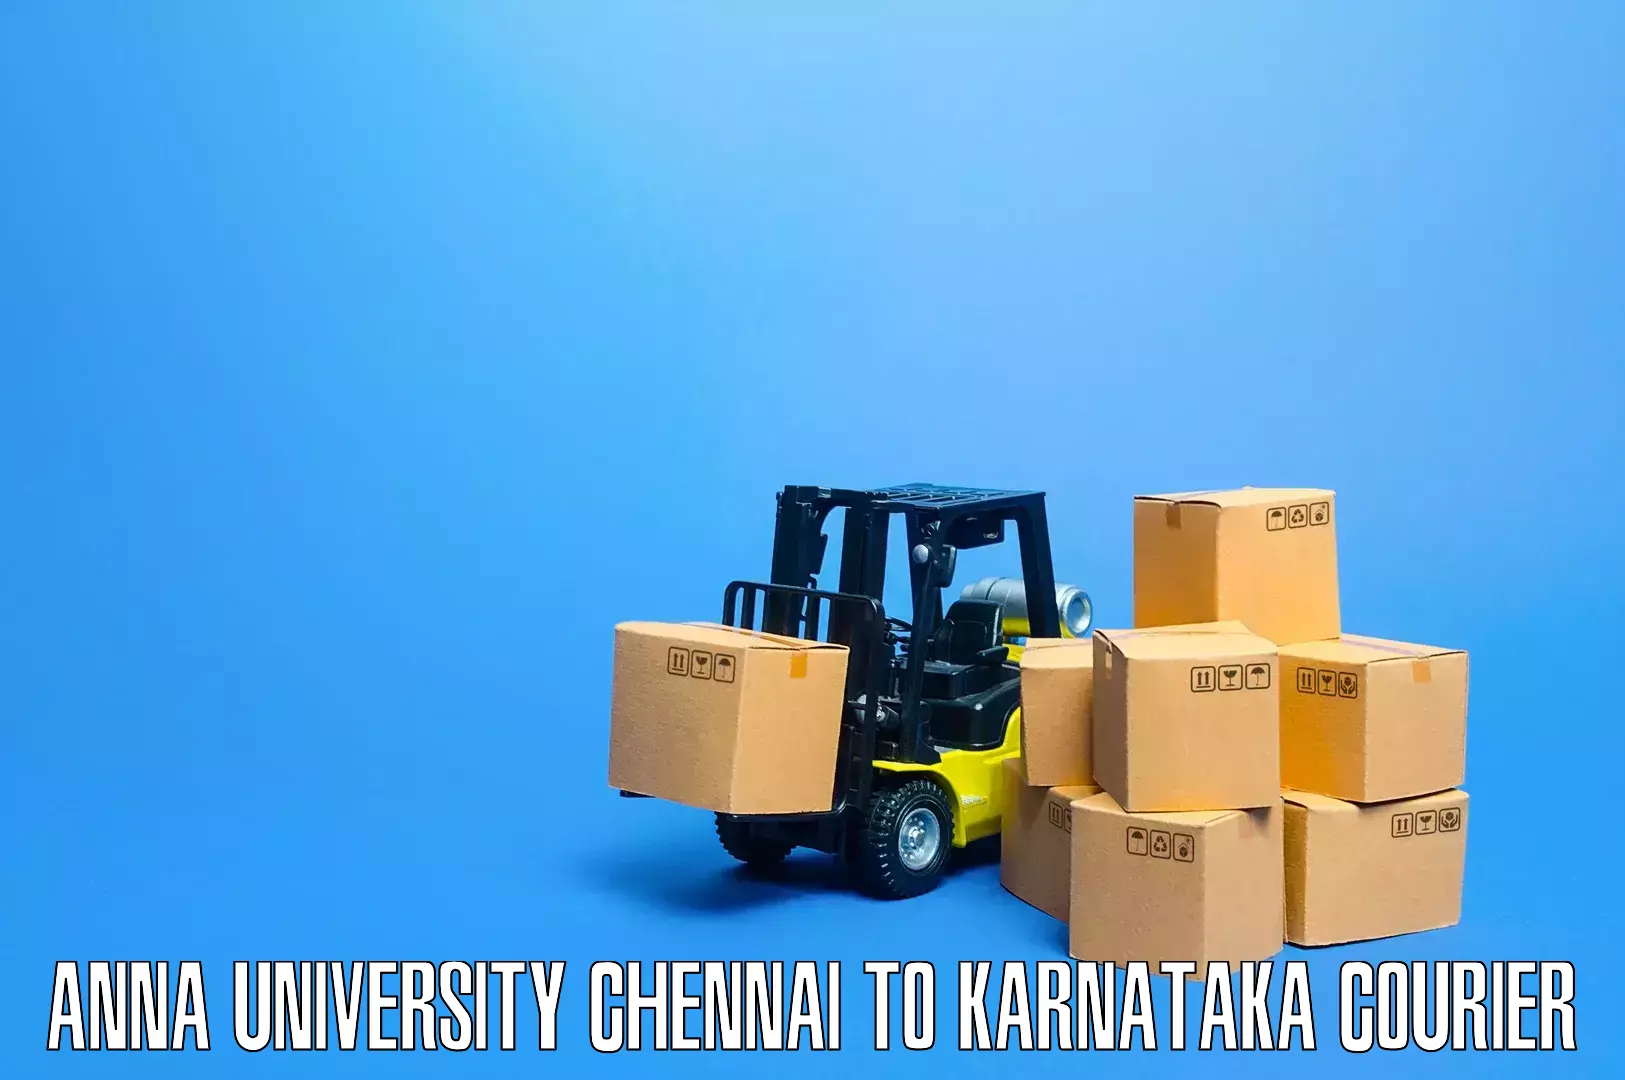 Specialized moving company Anna University Chennai to Yaragatti